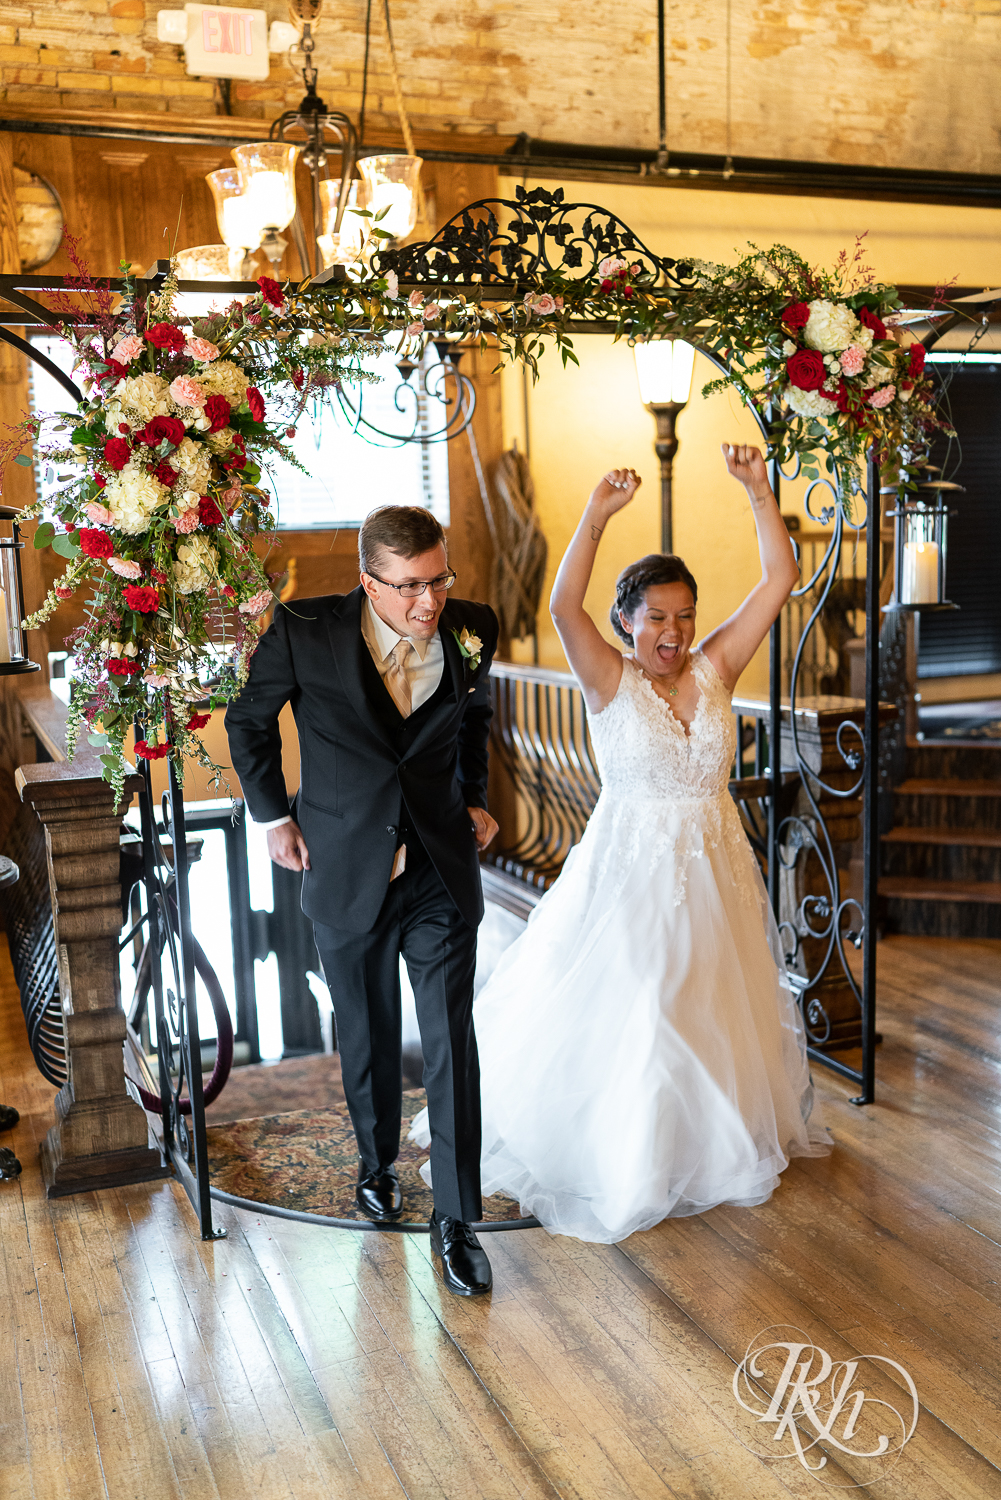 Bride and groom enter wedding reception at Kellerman's Event Center in White Bear Lake, Minnesota.